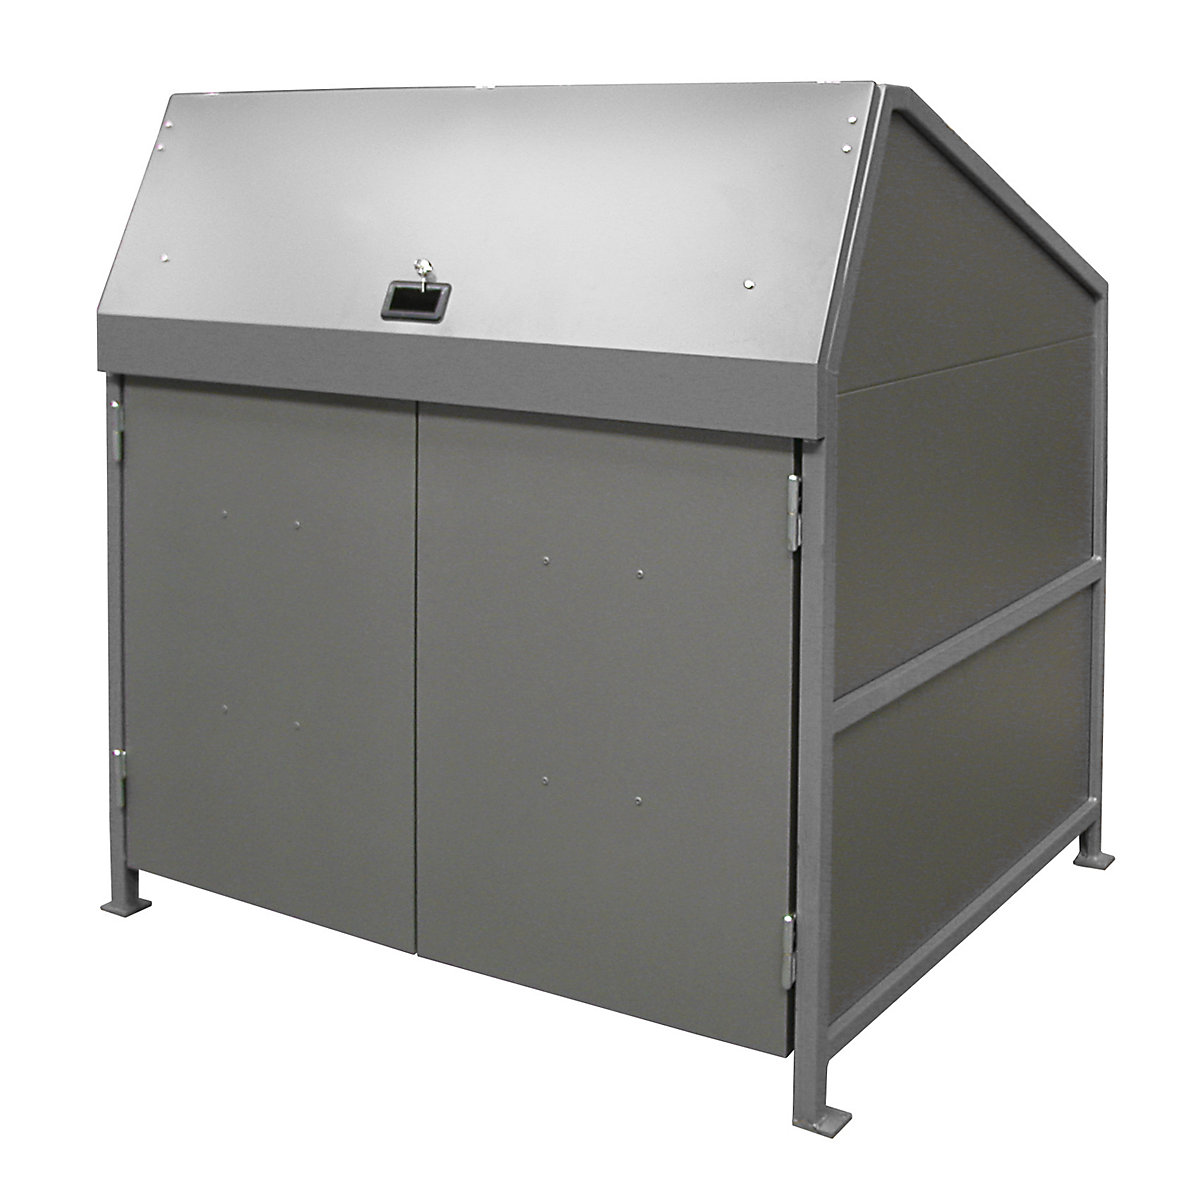 Waste bin enclosures – eurokraft pro, enclosed on 4 sides, with doors, frame in grey